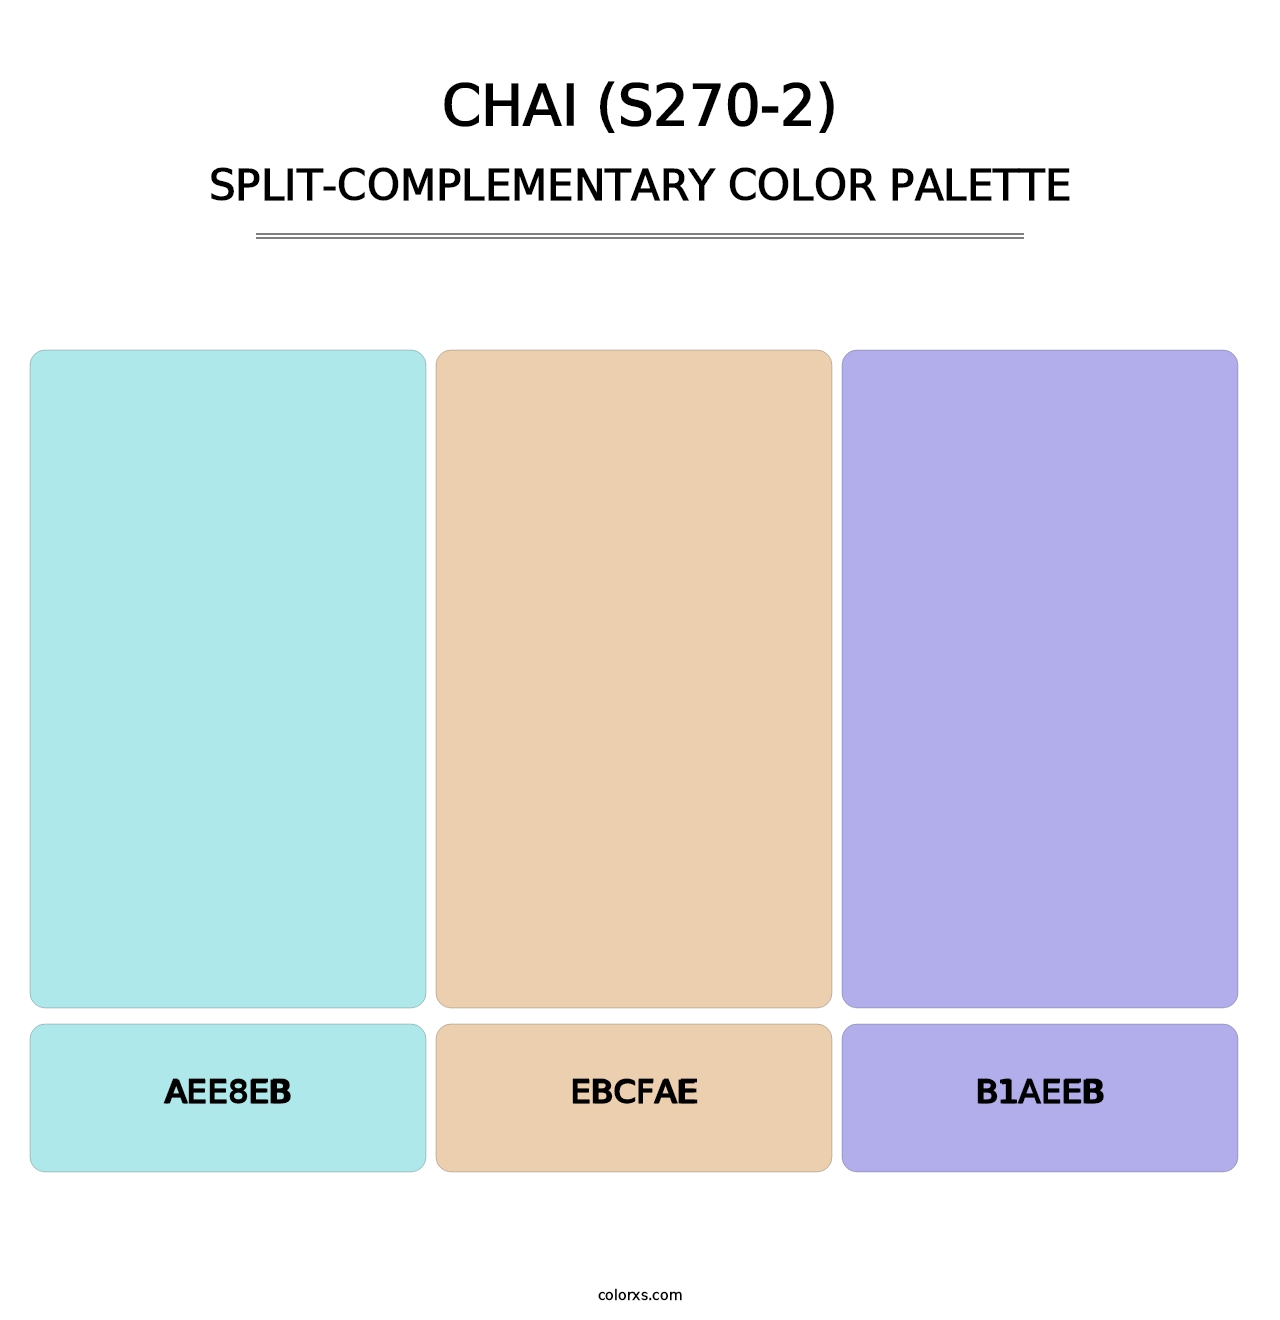 Chai (S270-2) - Split-Complementary Color Palette